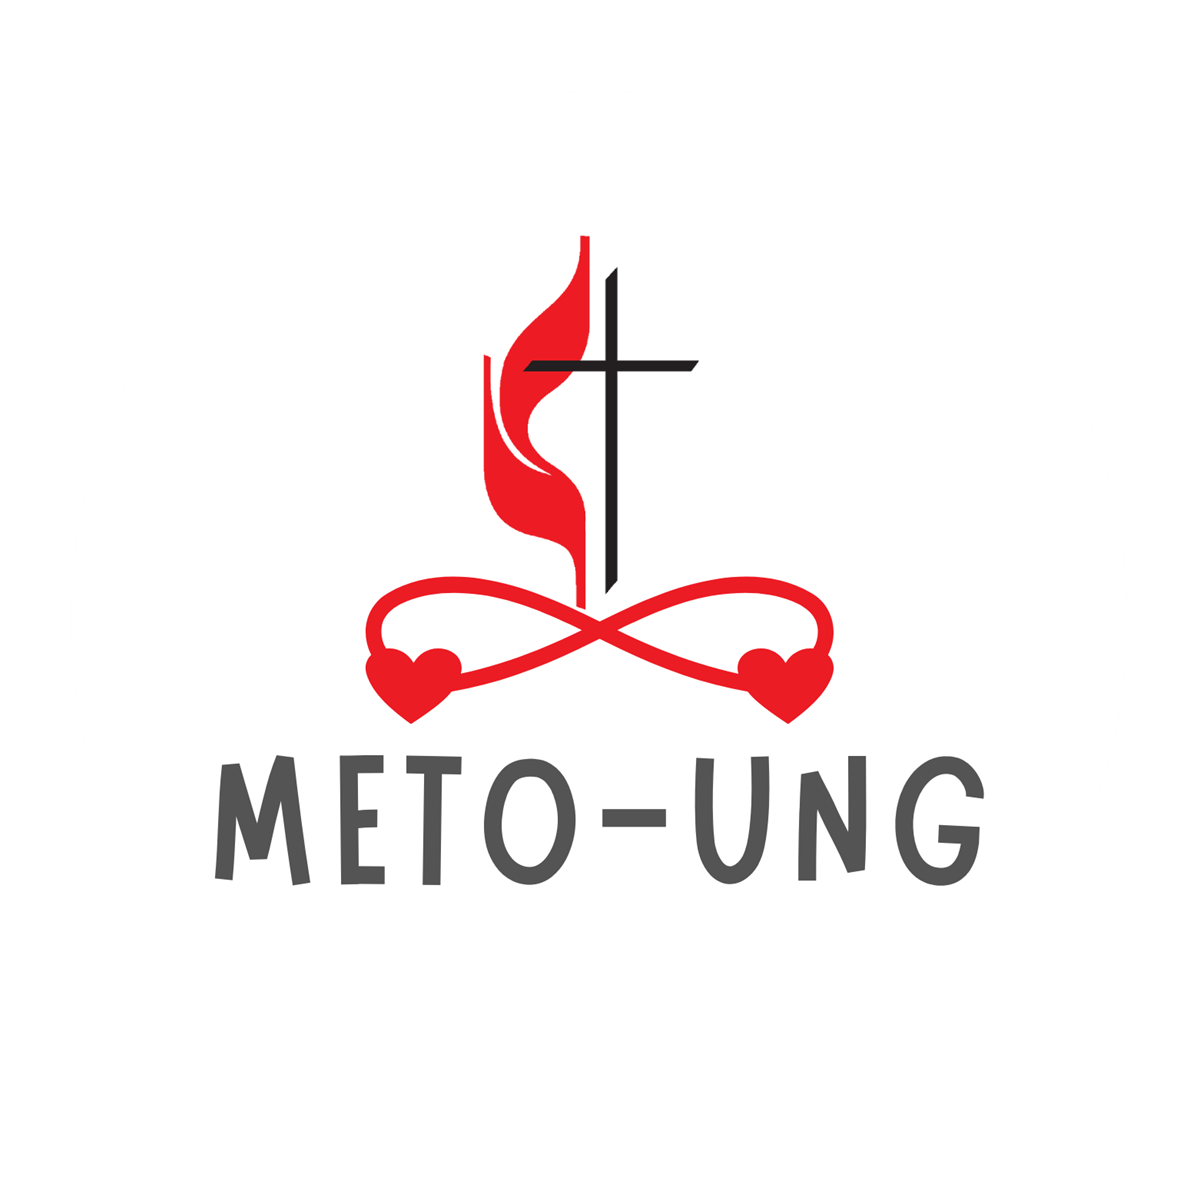 meto-ung-(2)